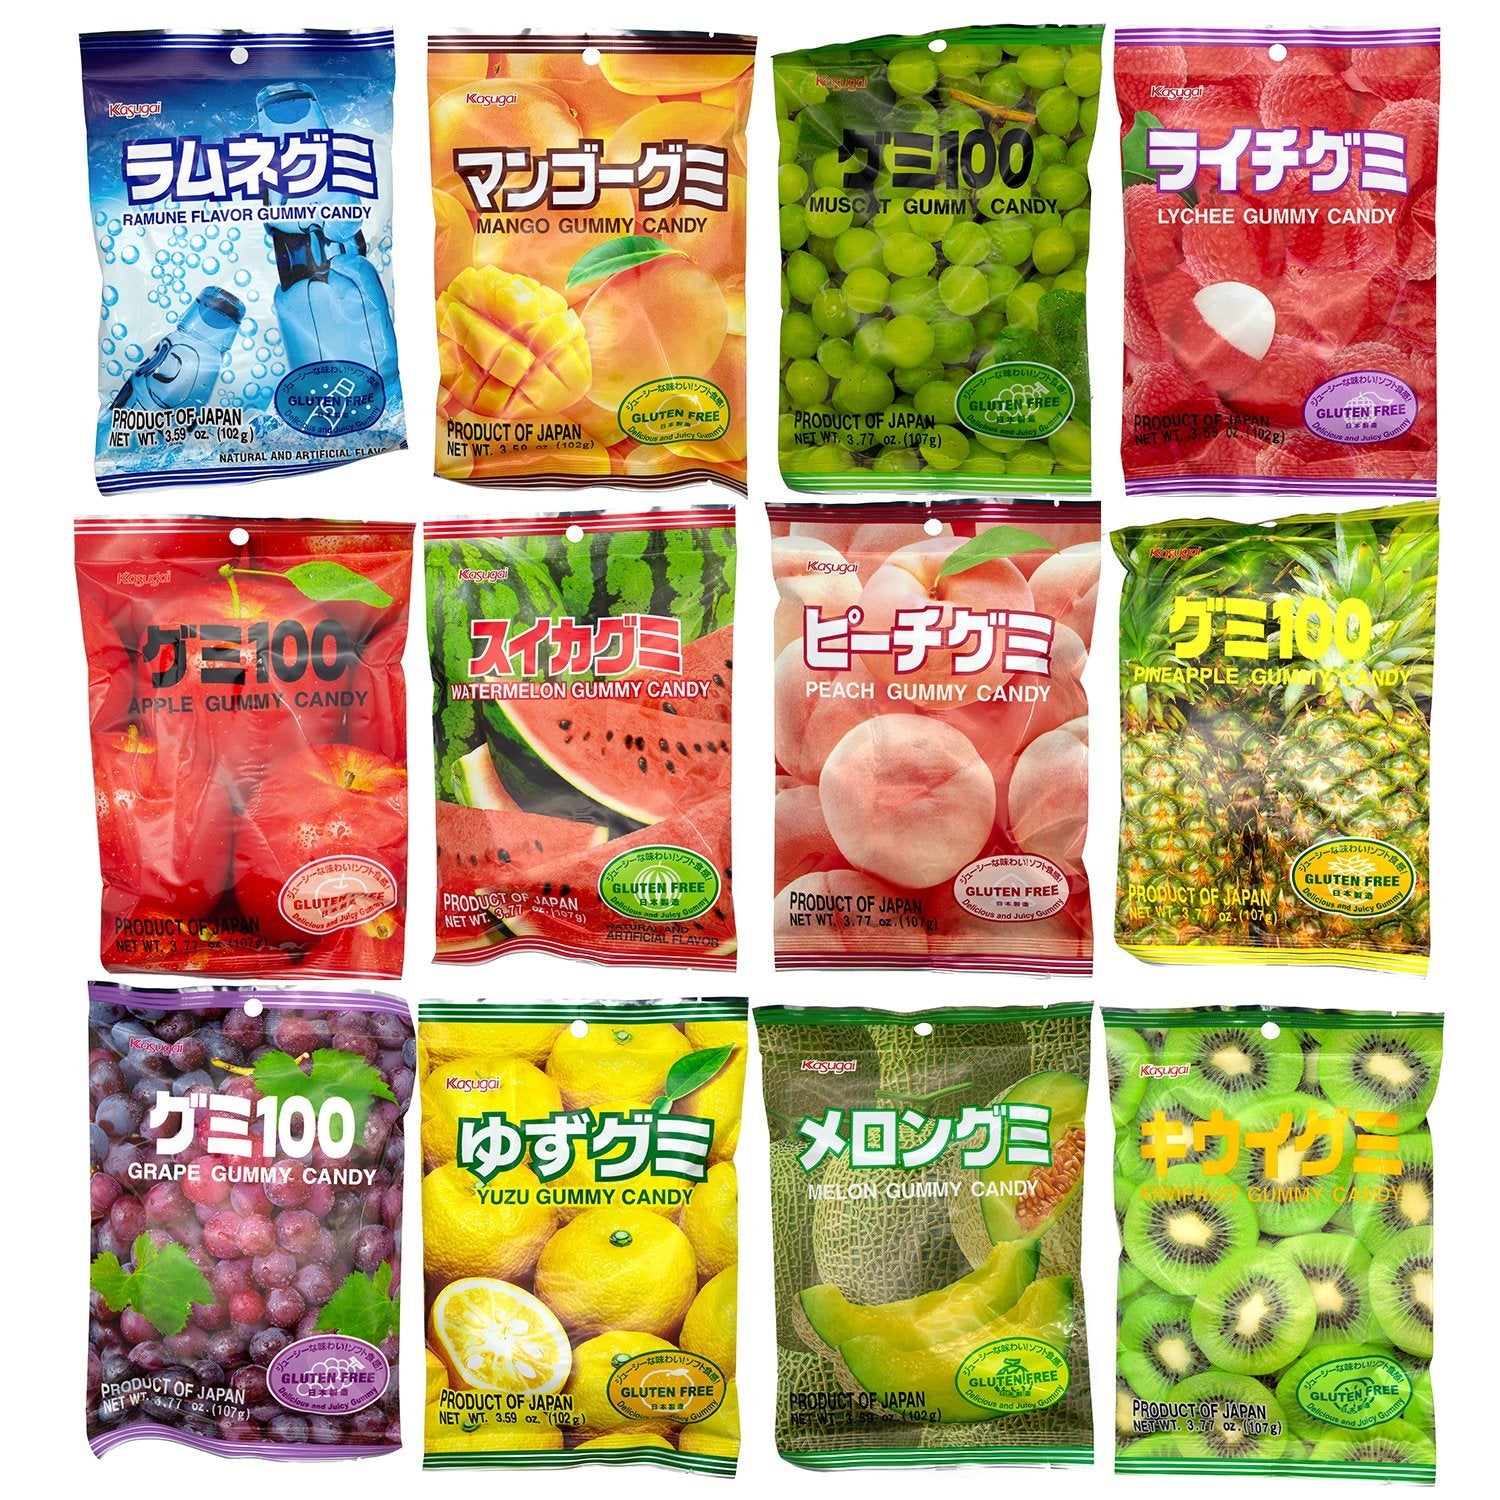 Kasugai Gummy Candy Kasugai Variety 12 Count 